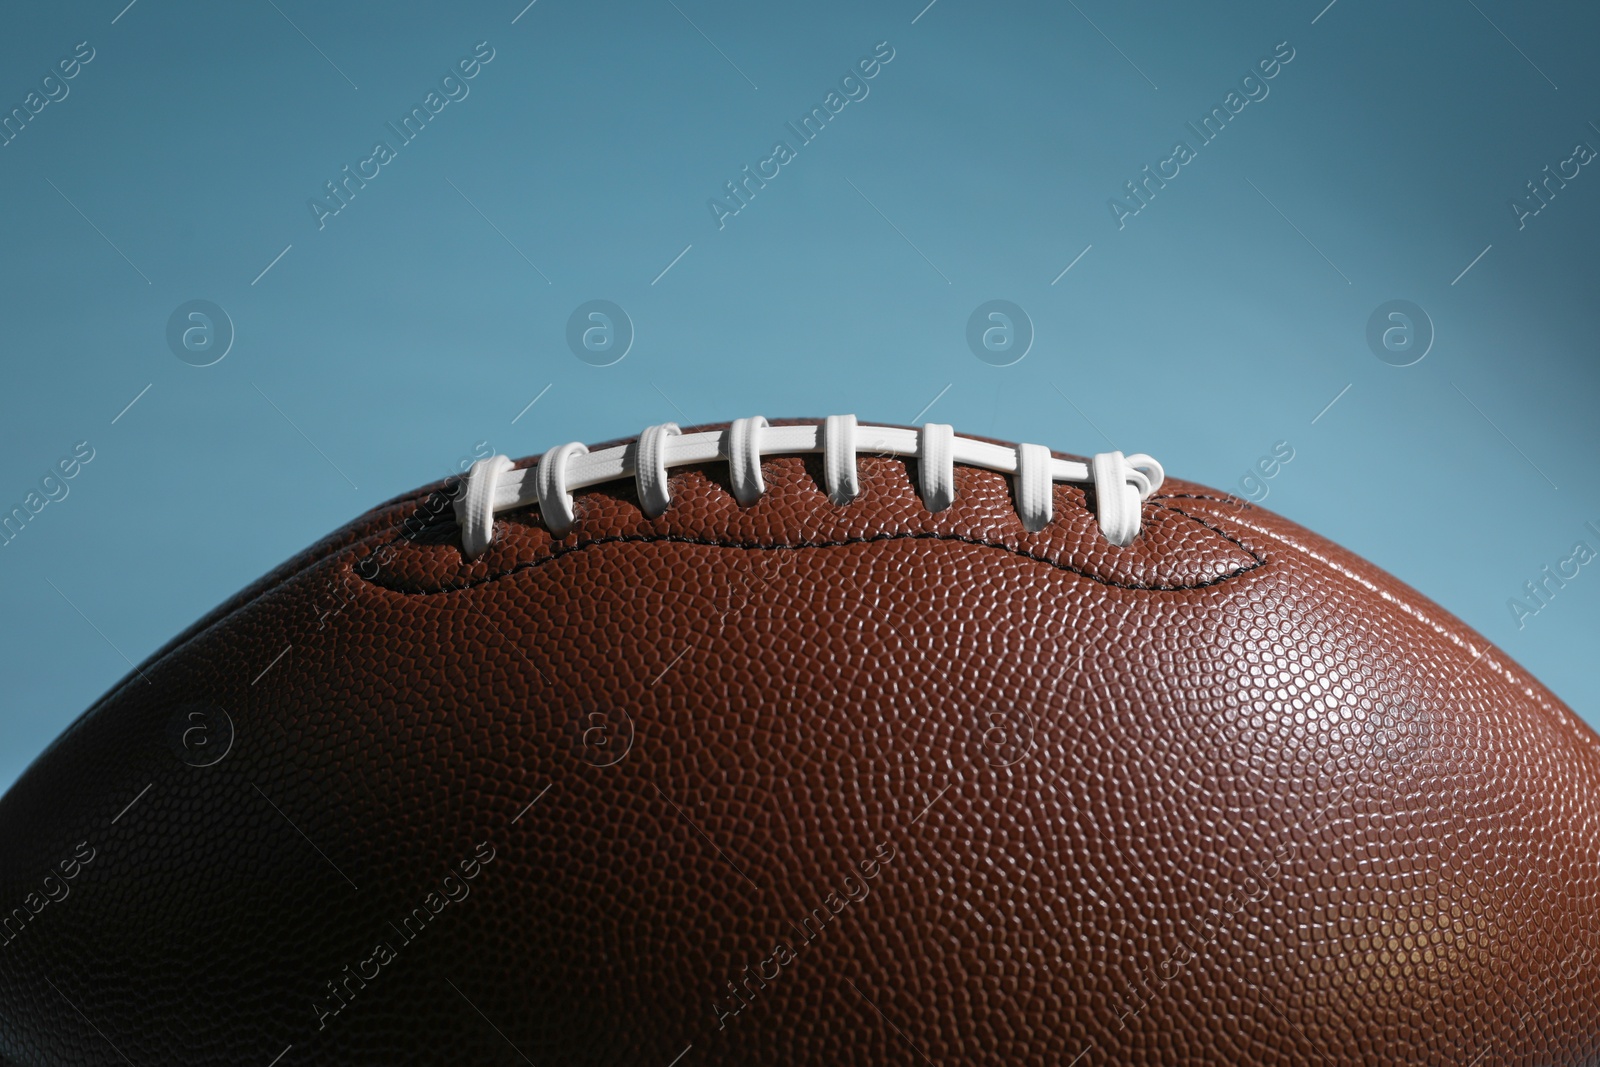 Photo of American football ball on light blue background, closeup